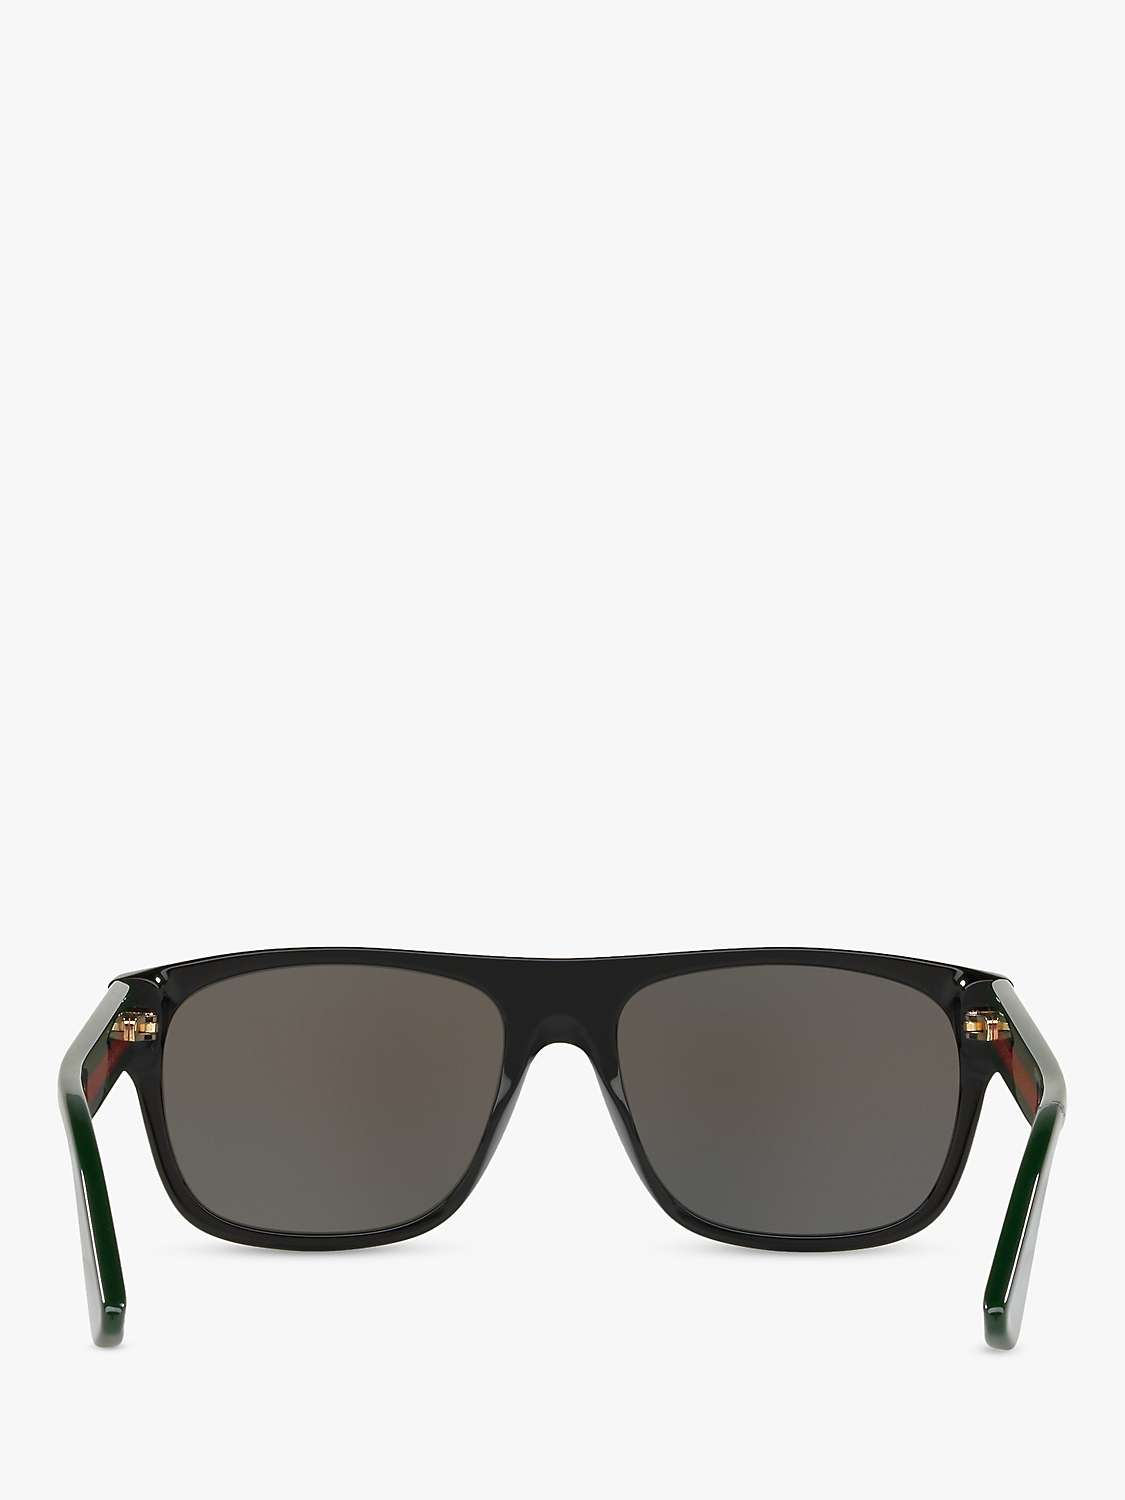 Buy Gucci GG0341S Men's Polarised Rectangular Sunglasses, Black/Grey Online at johnlewis.com